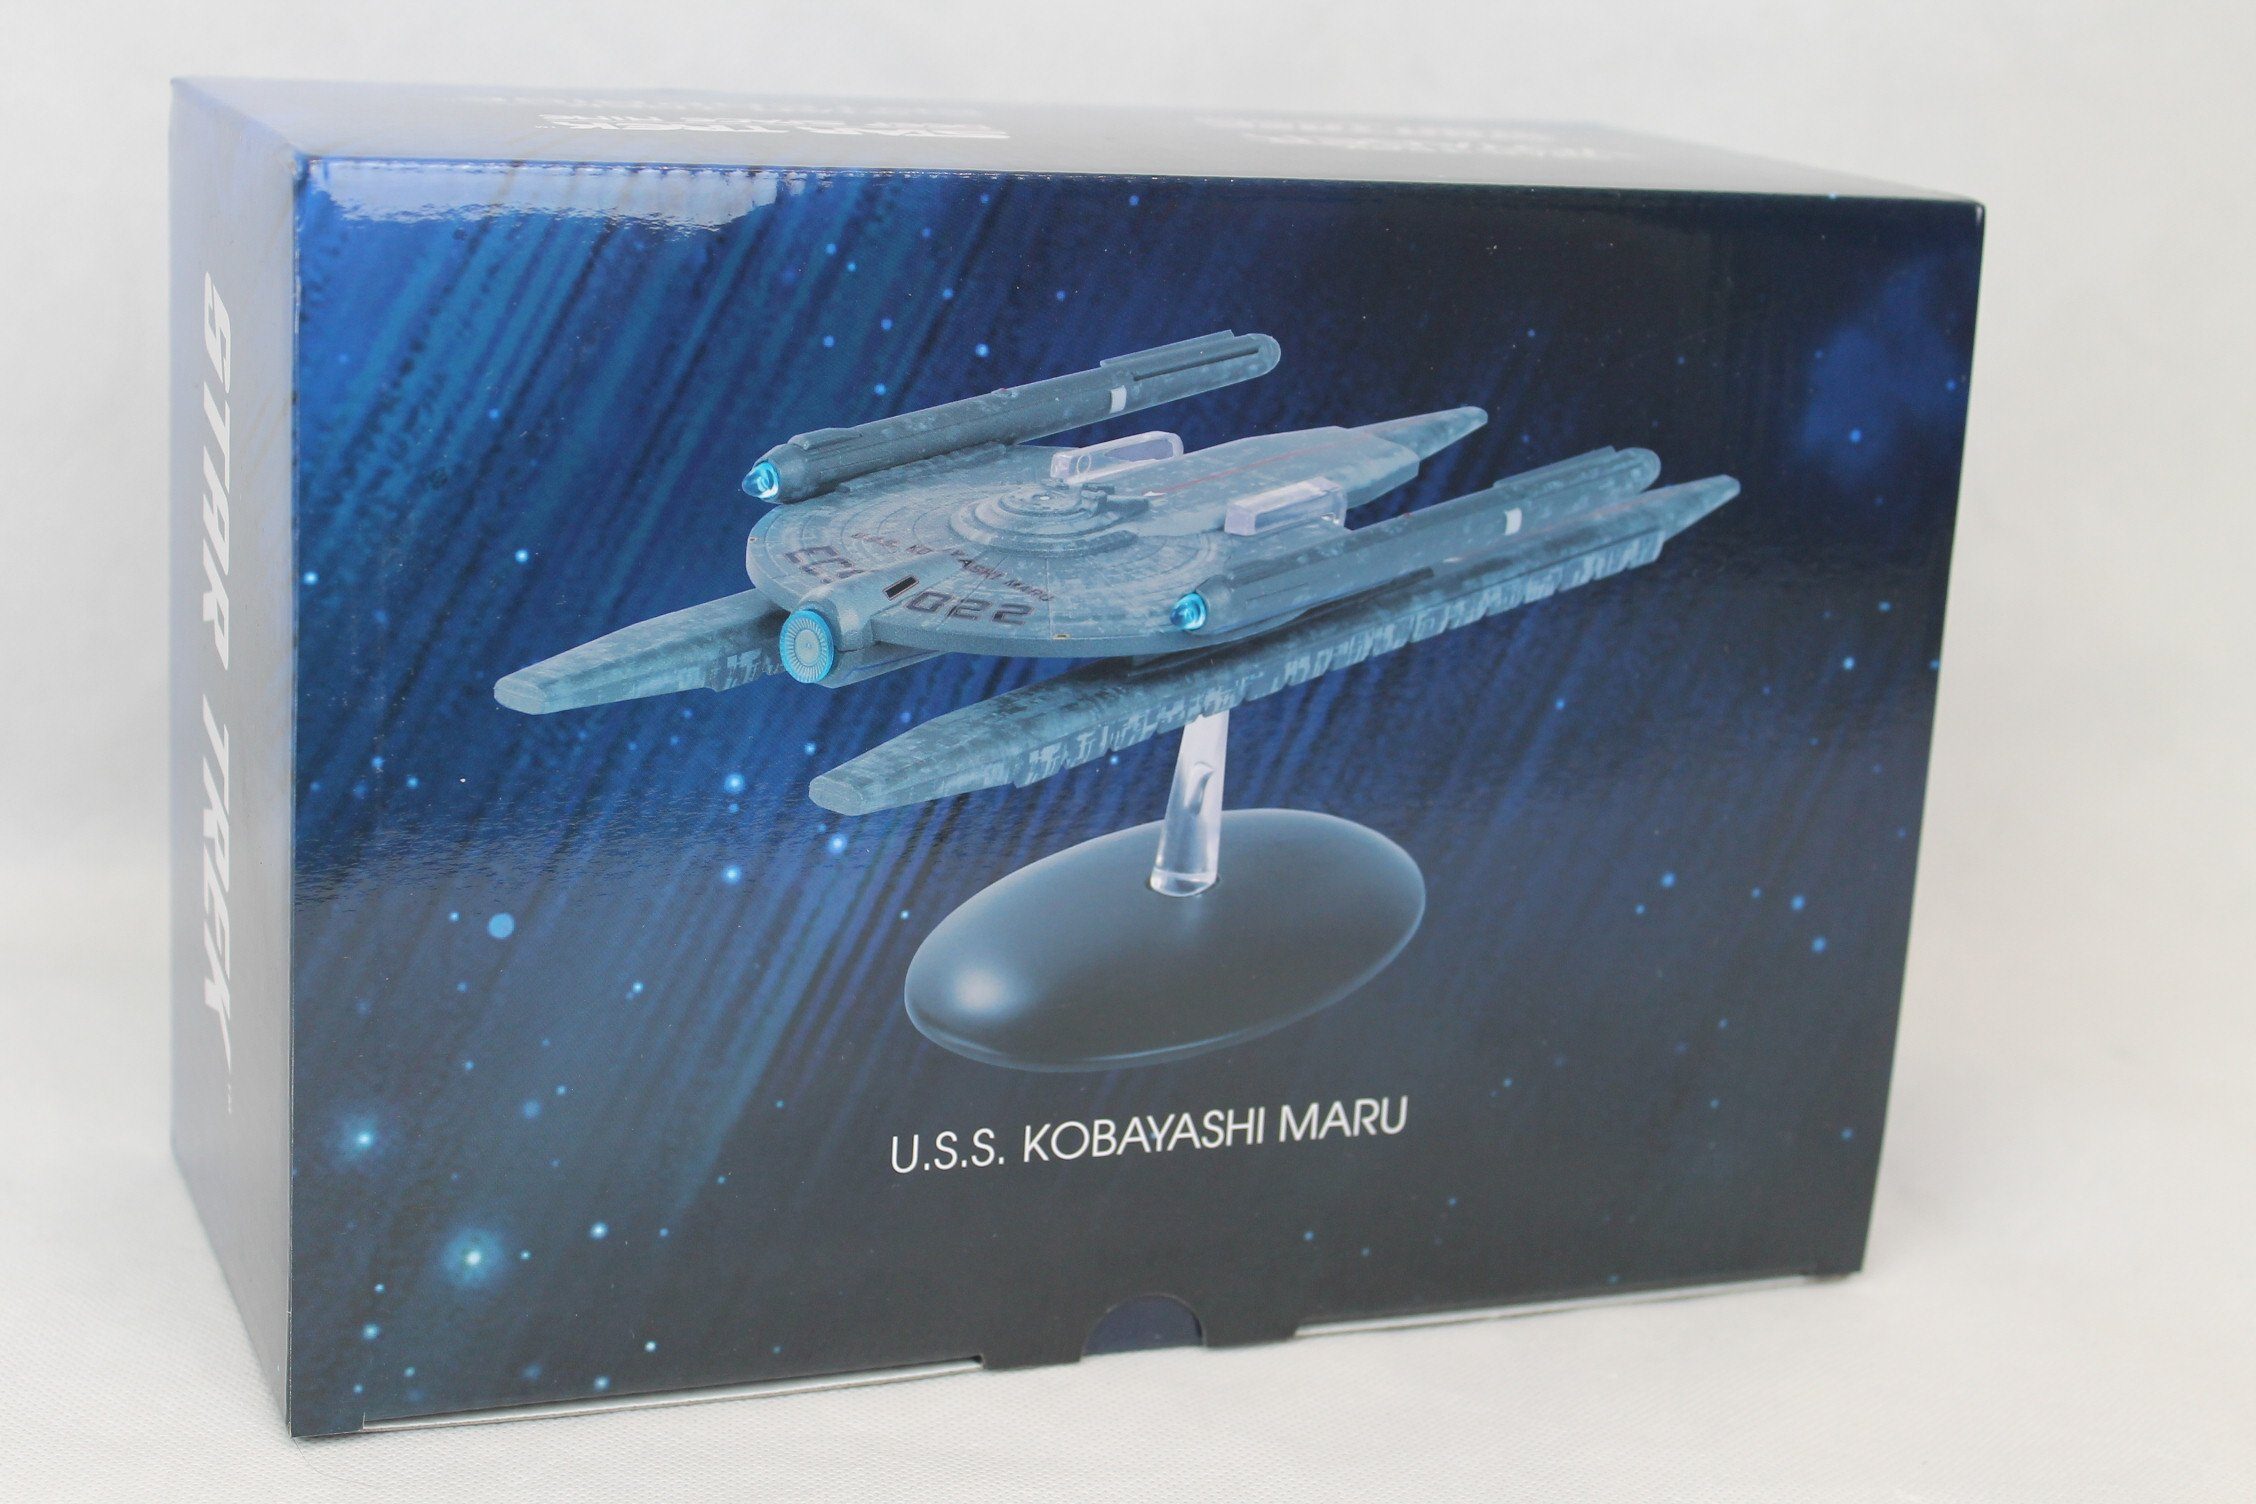 Star Trek Spielesammlung, USS Kobayashi Maru Starship Special Edition Replica, 22cm